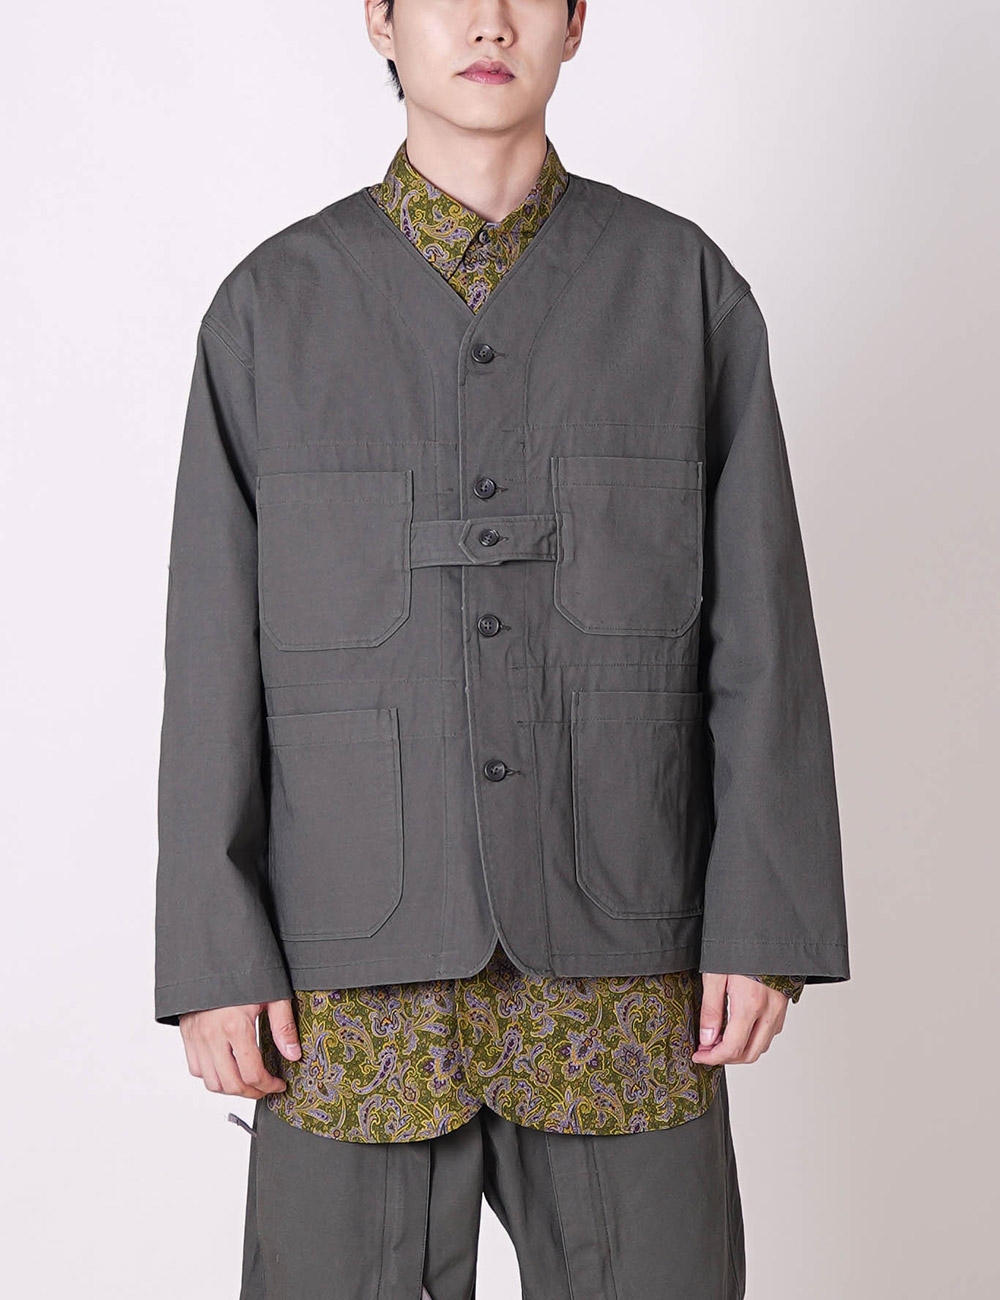 Engineered Garments : Cardigan Jacket (Olive Heavyweight Cotton Ripstop)